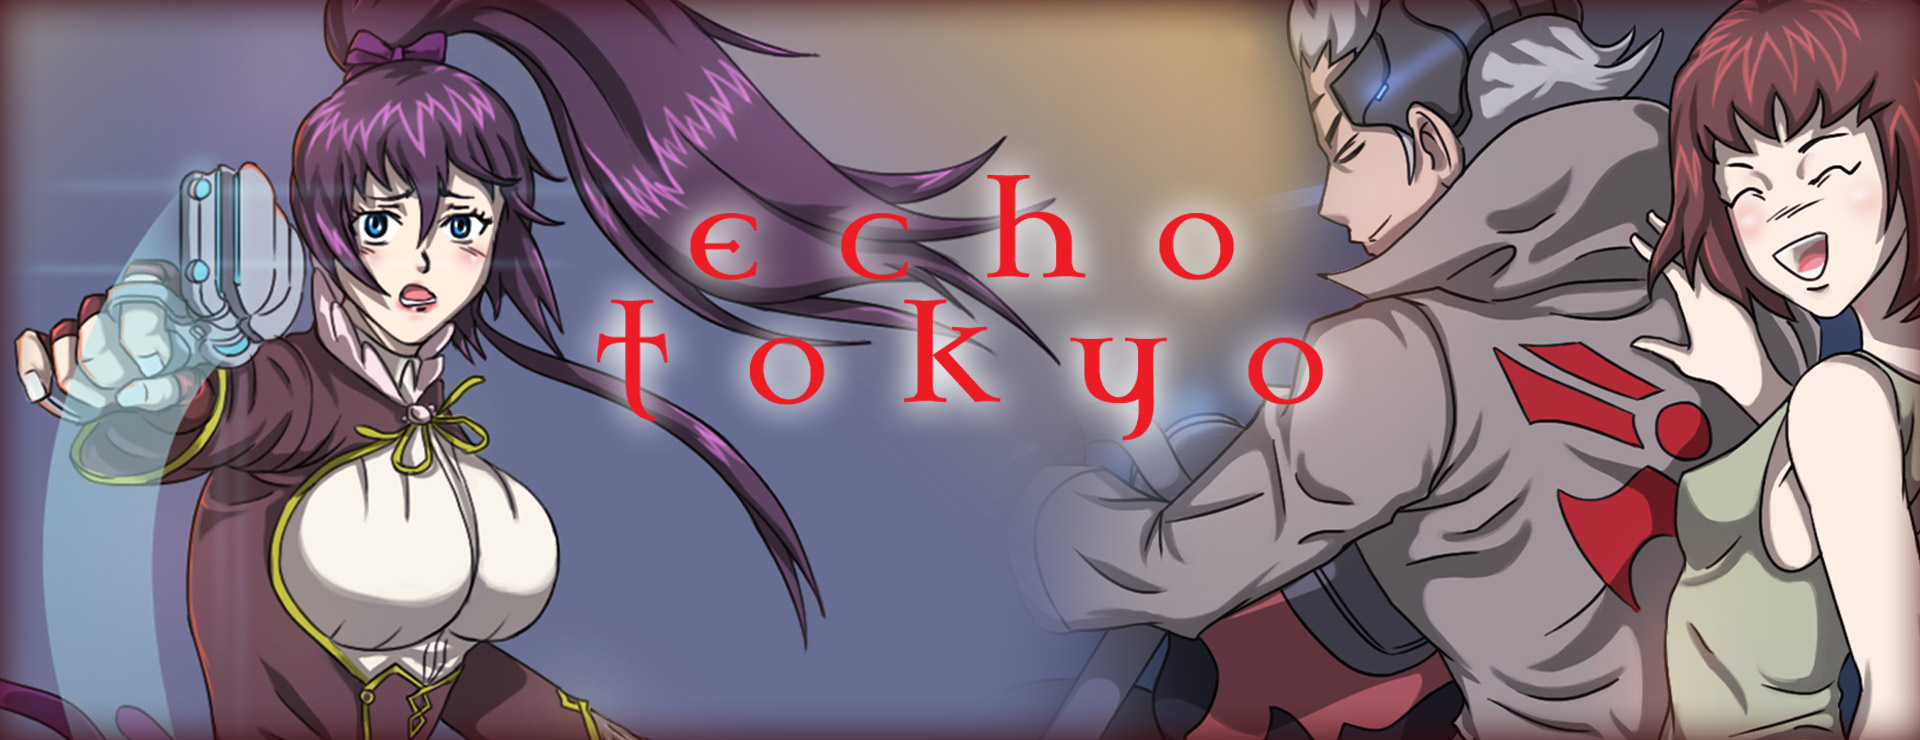 Echo Tokyo Intro - Visual Novel Game